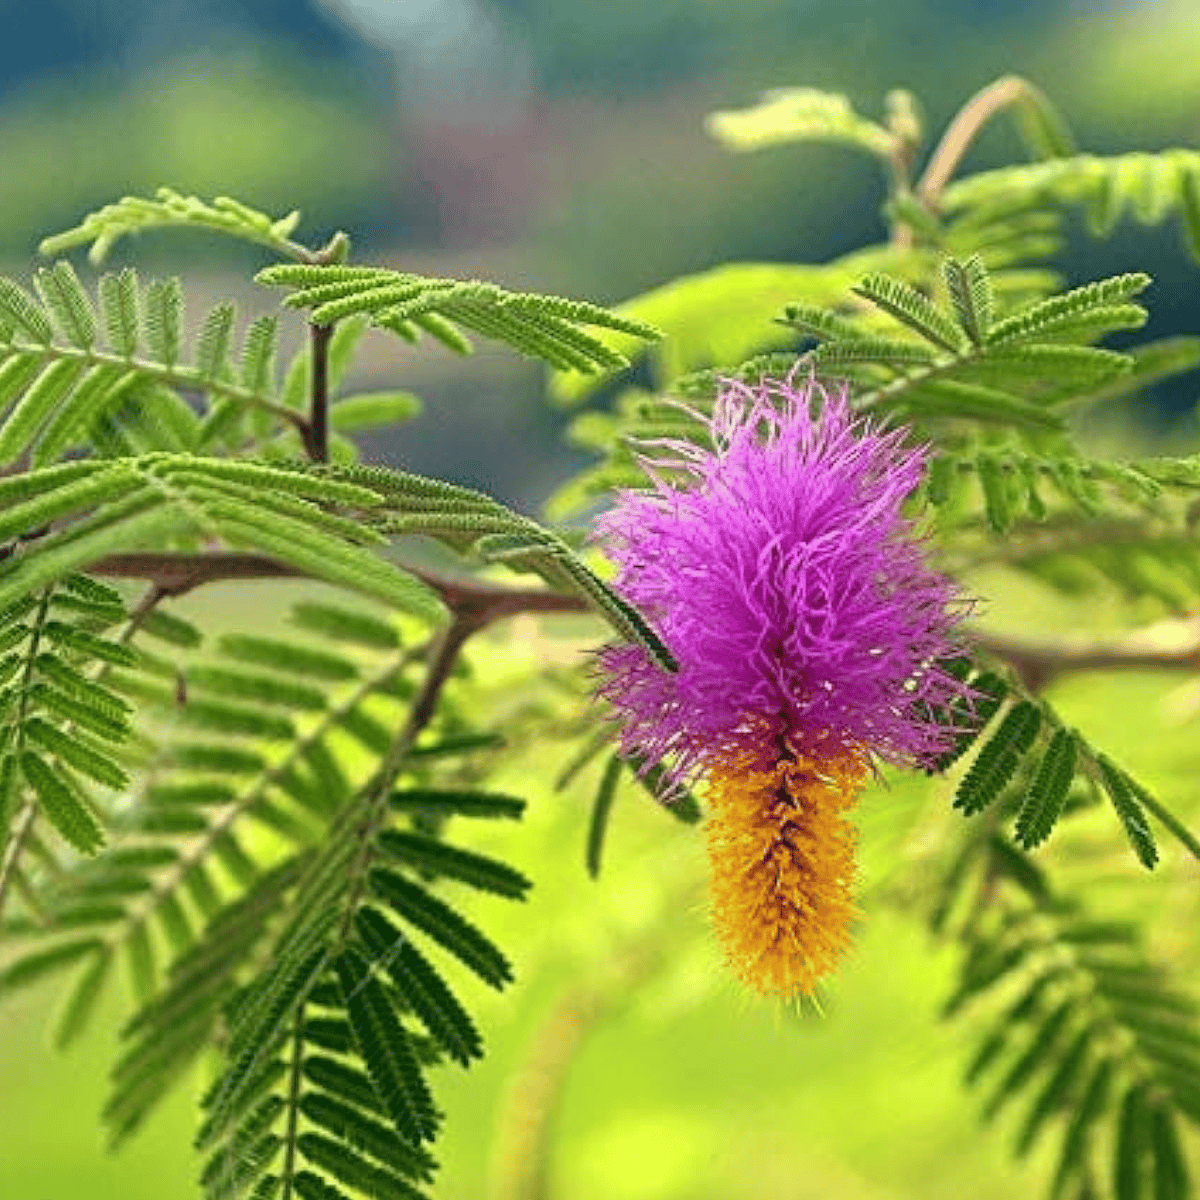 Shami / Prosopis Cineraria Holy Flower live plant